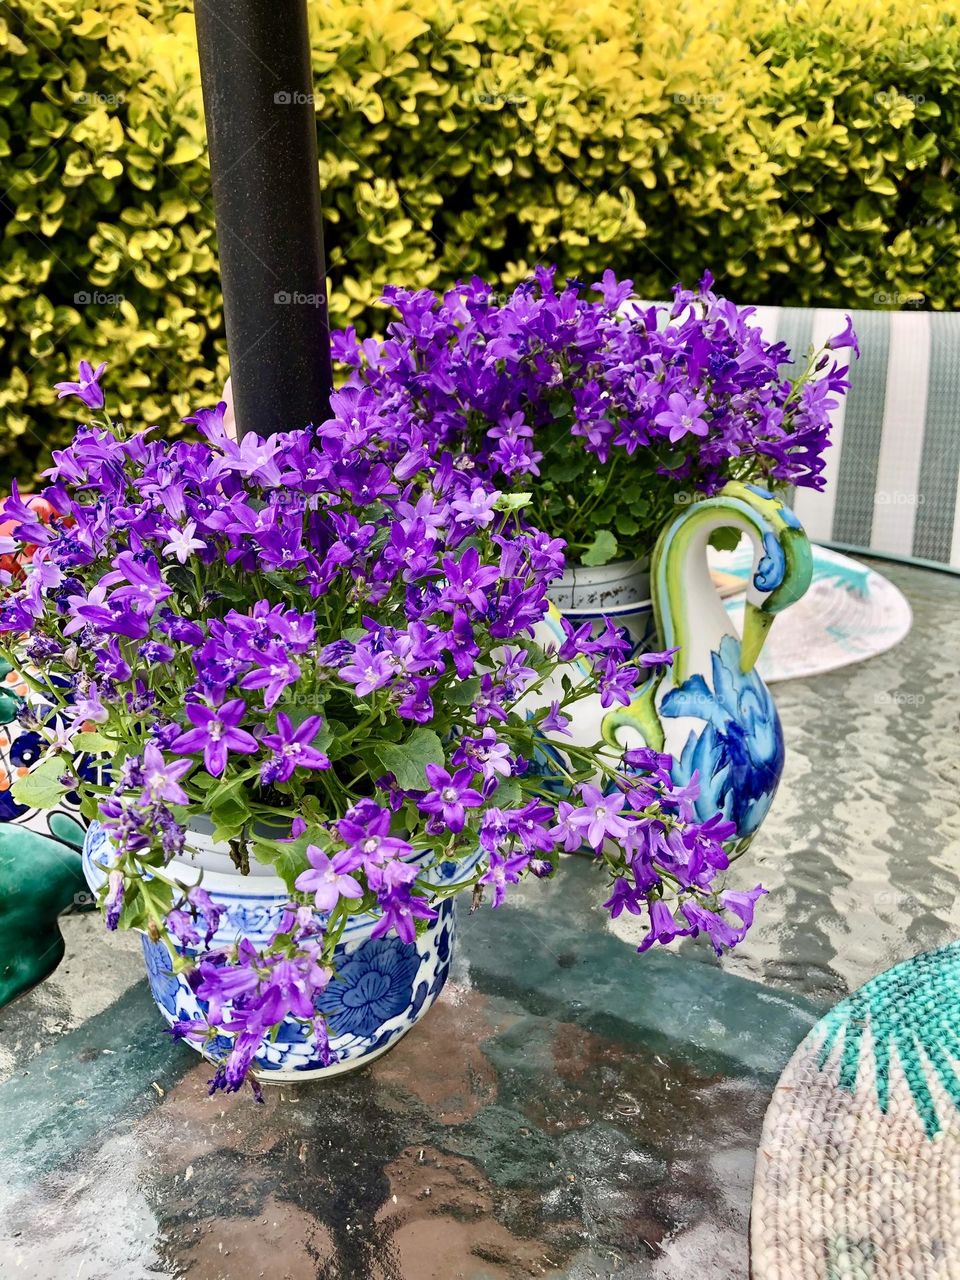 Lovely purple delicate flowers / Garden decorations 